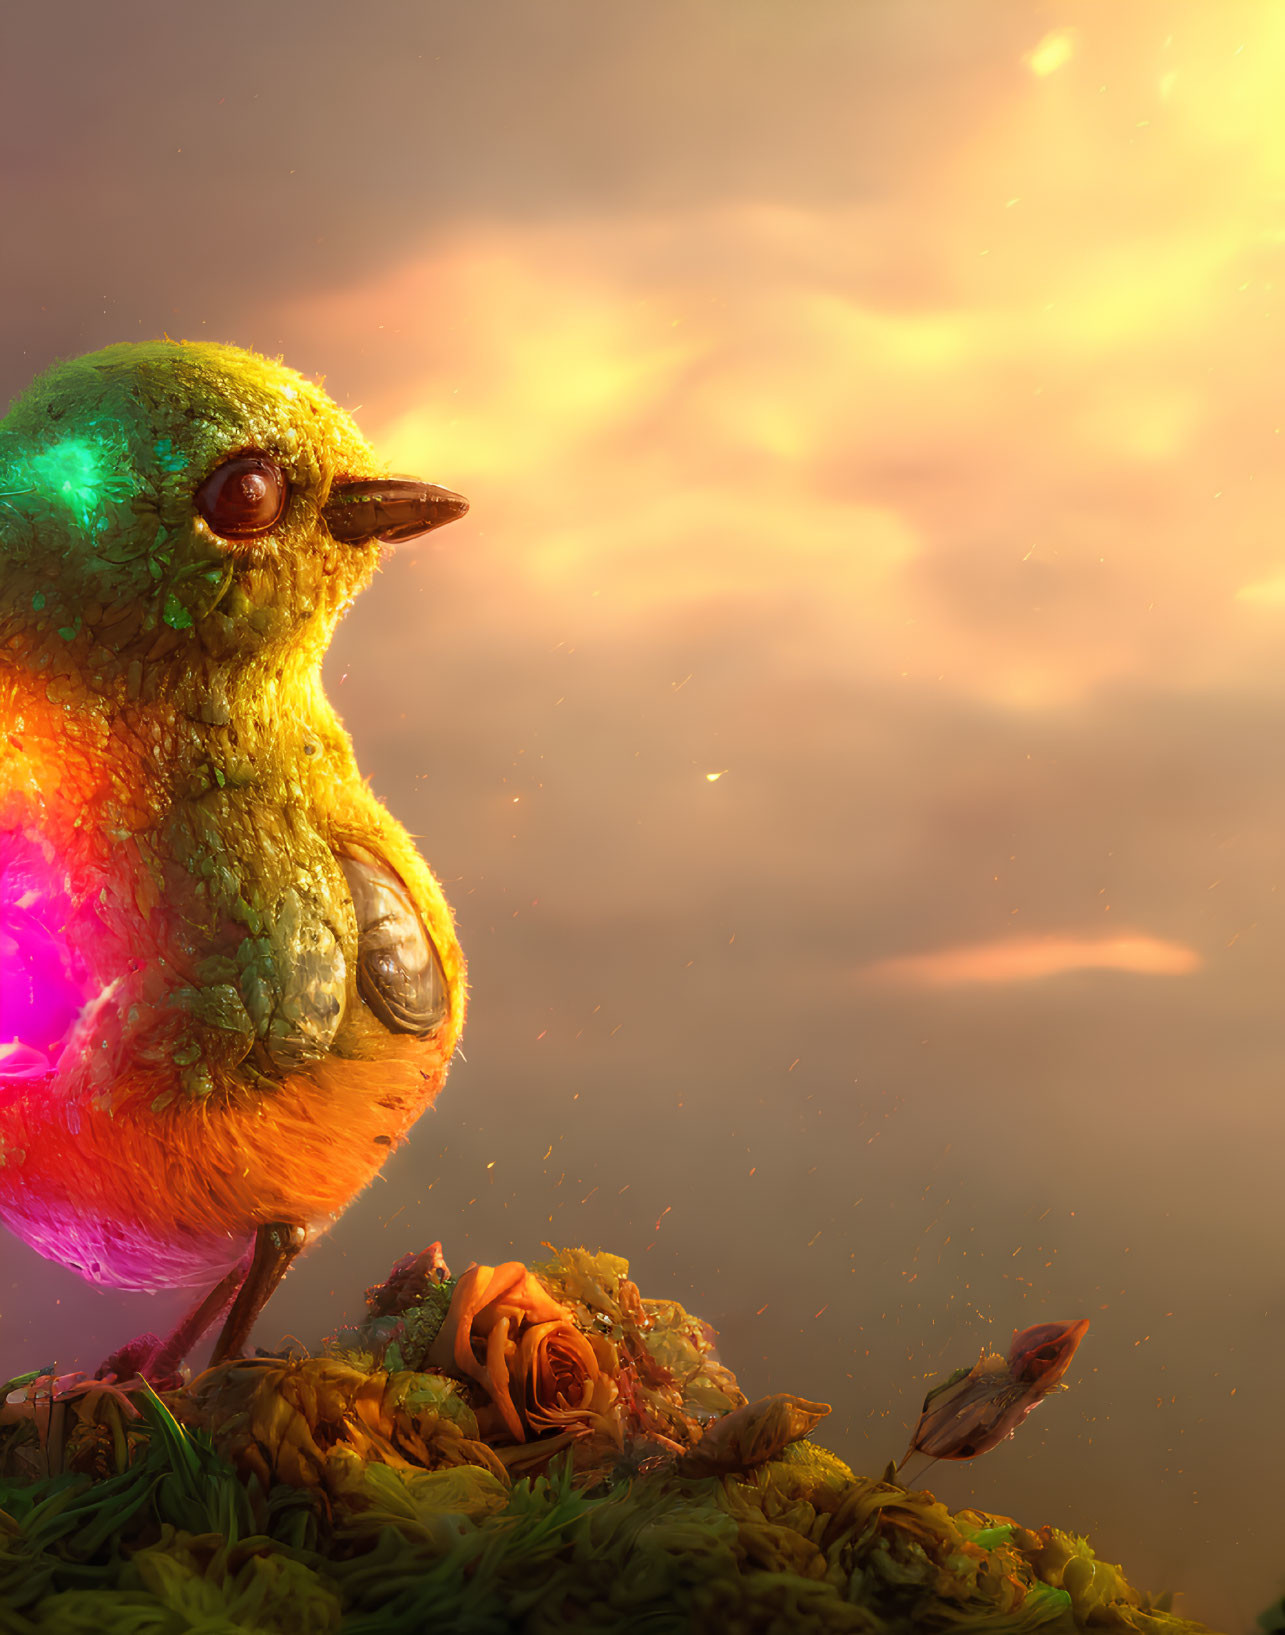 Colorful plump bird on flower mound under warm sky